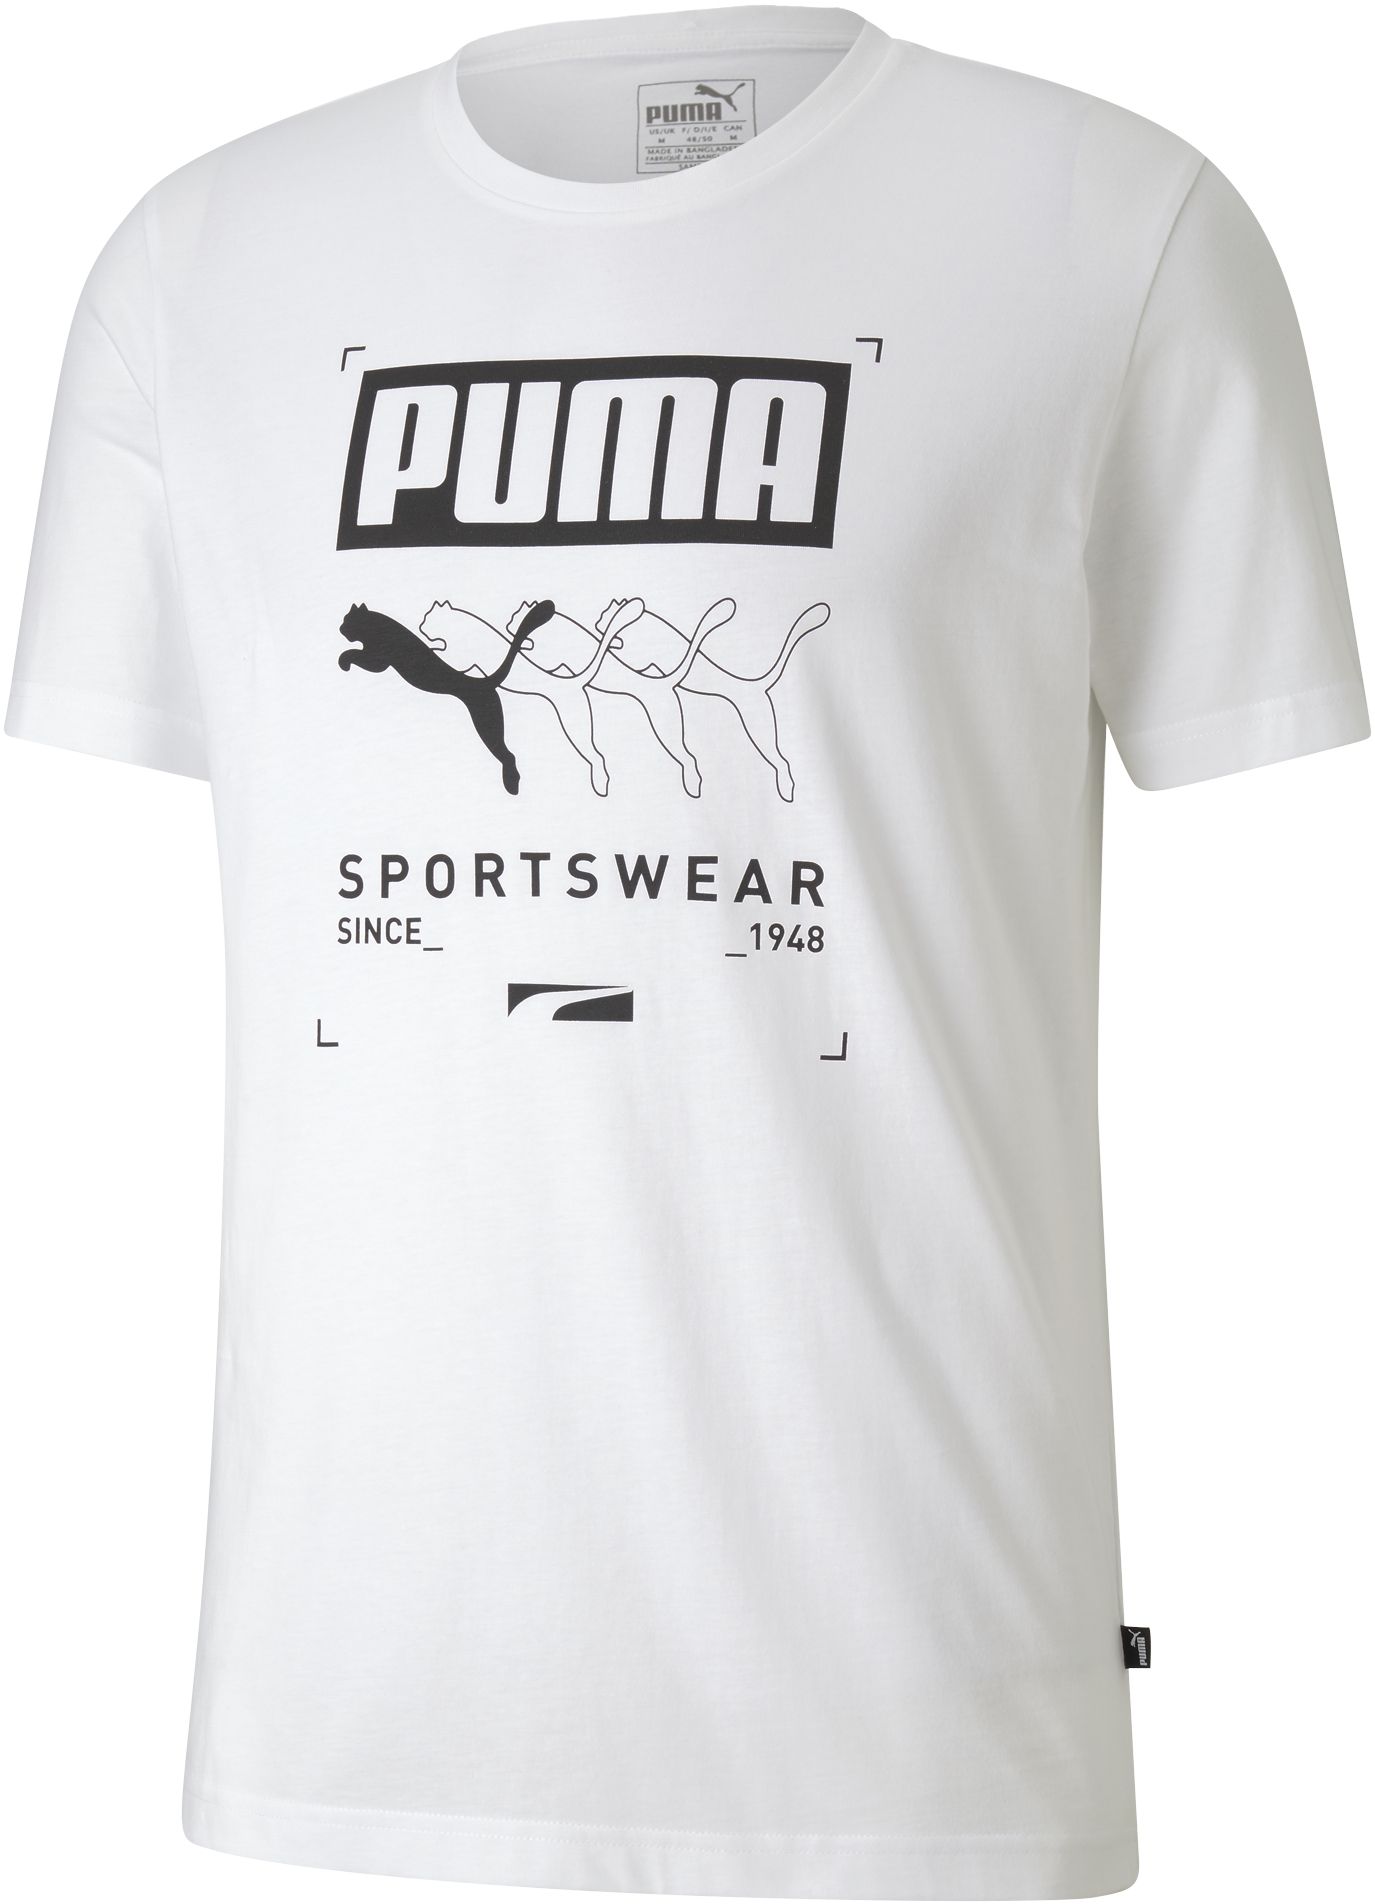 Men’s sports T-shirt